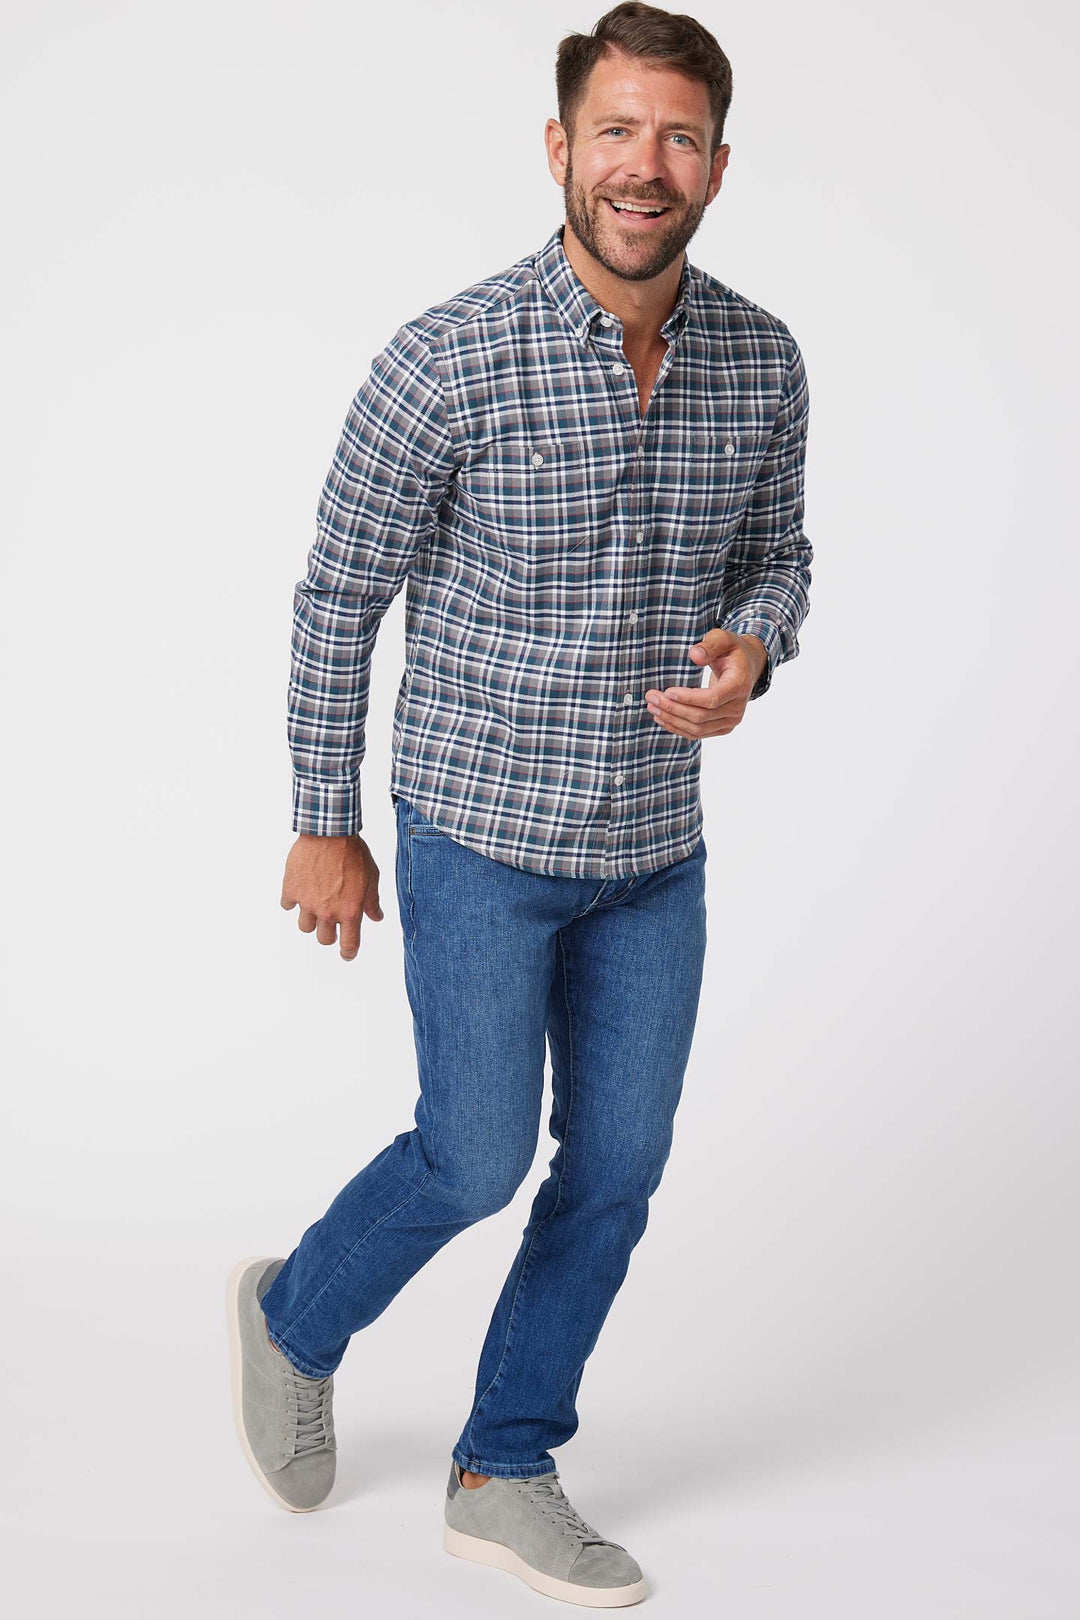 Men's Epic Soft™ Plaid Long Sleeve Shirt, Men's SHIRTS